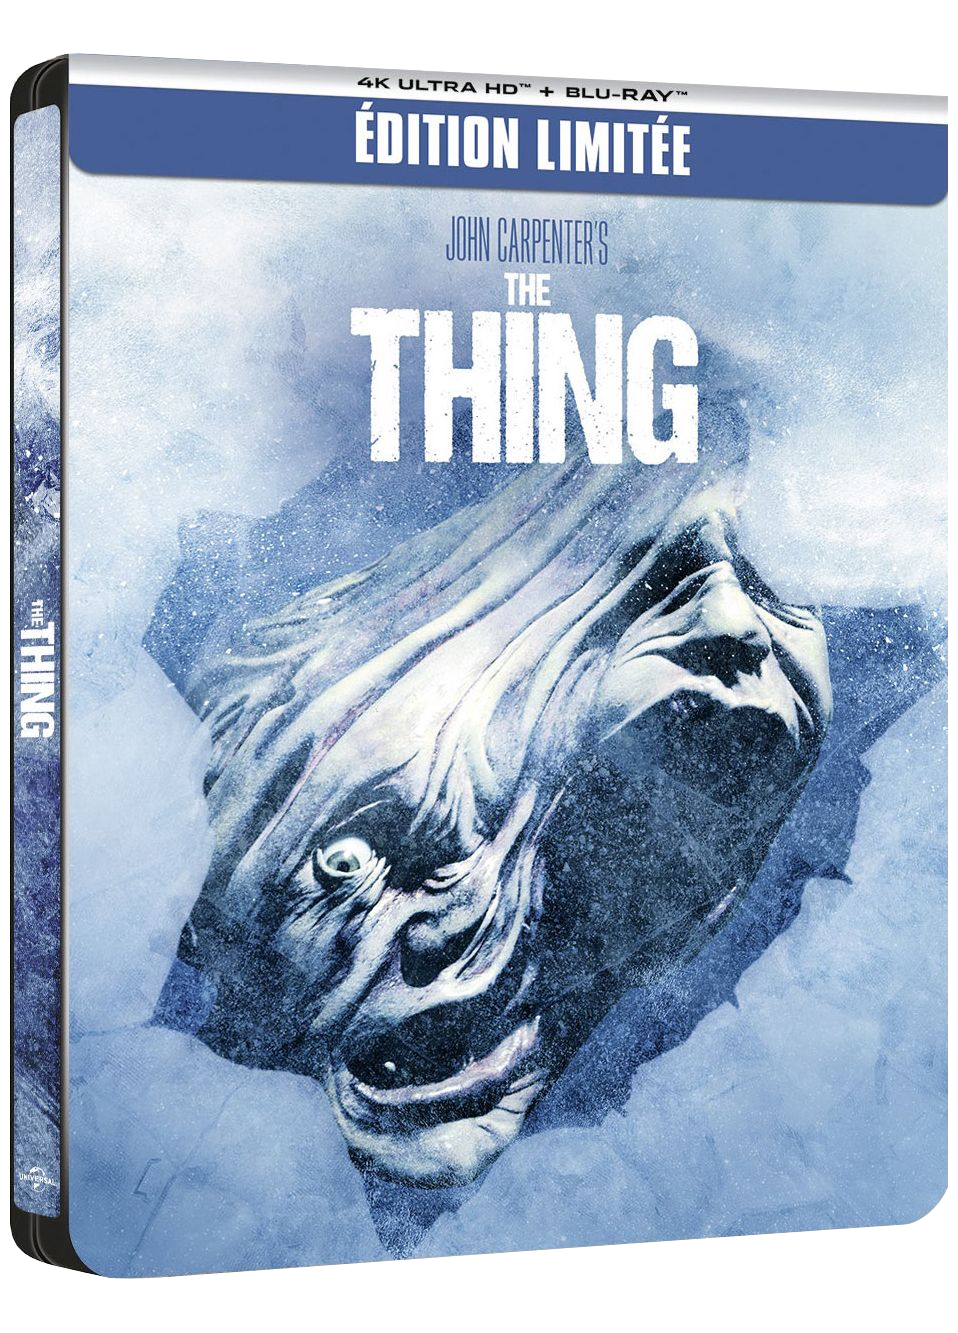 The Thing (1982) - 4K Ultra HD + Blu-ray - SteelBook édition limitée